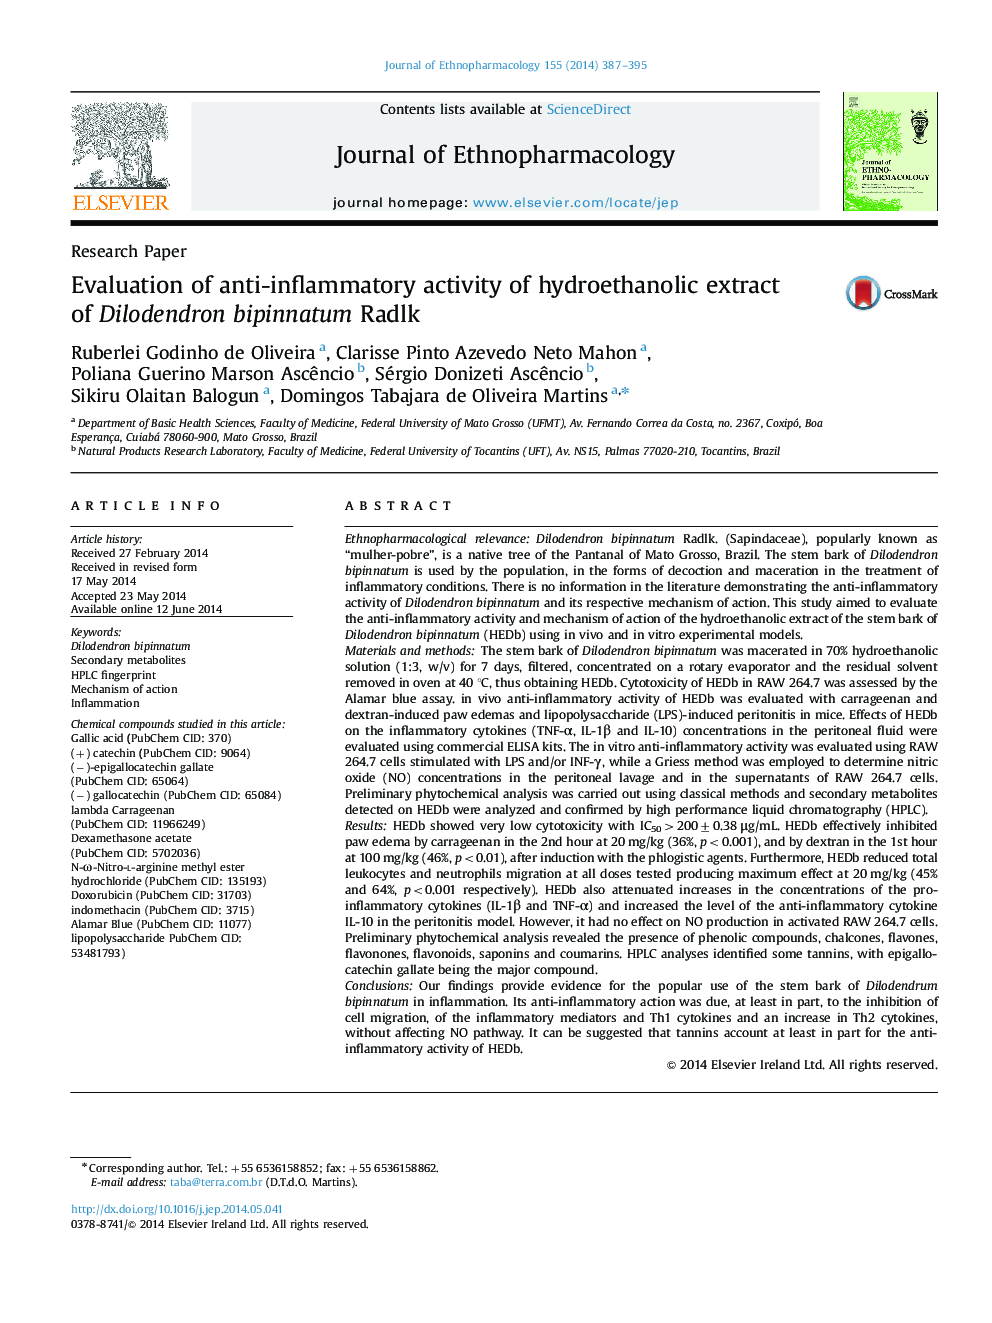 Evaluation of anti-inflammatory activity of hydroethanolic extract of Dilodendron bipinnatum Radlk